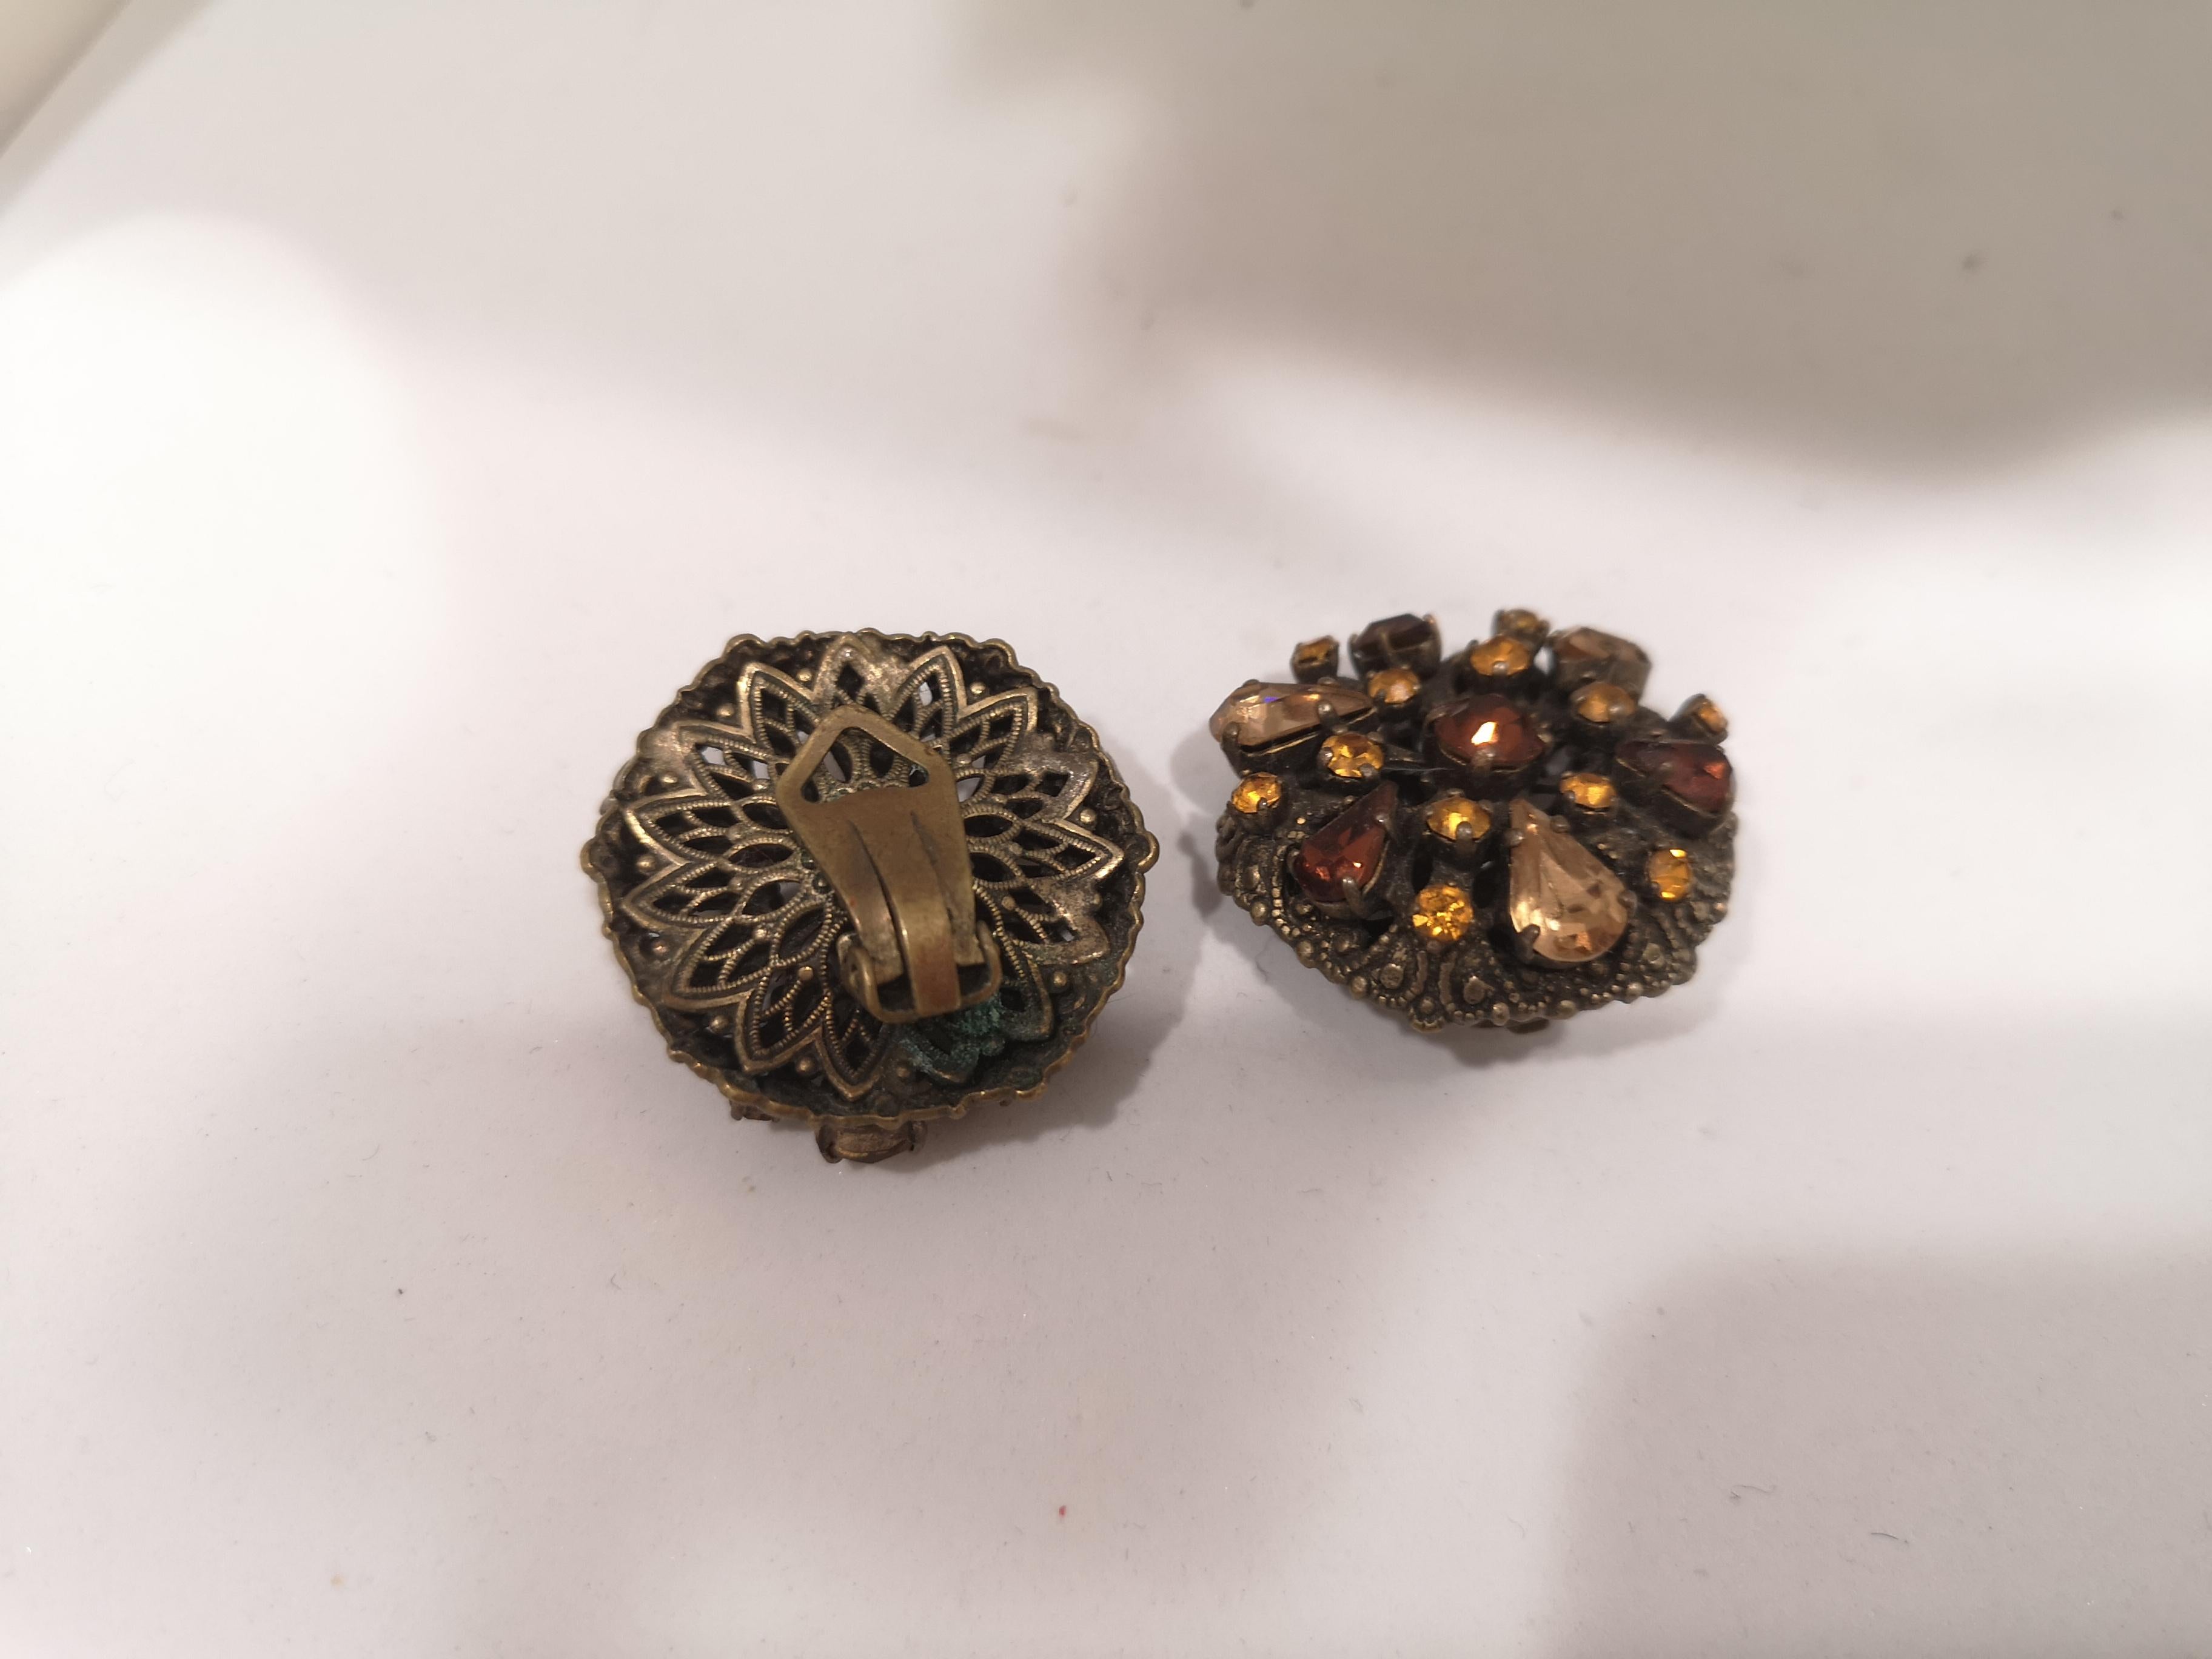 Vintage bronze tone amber swarovski stones clip on earrings
3x3 cm